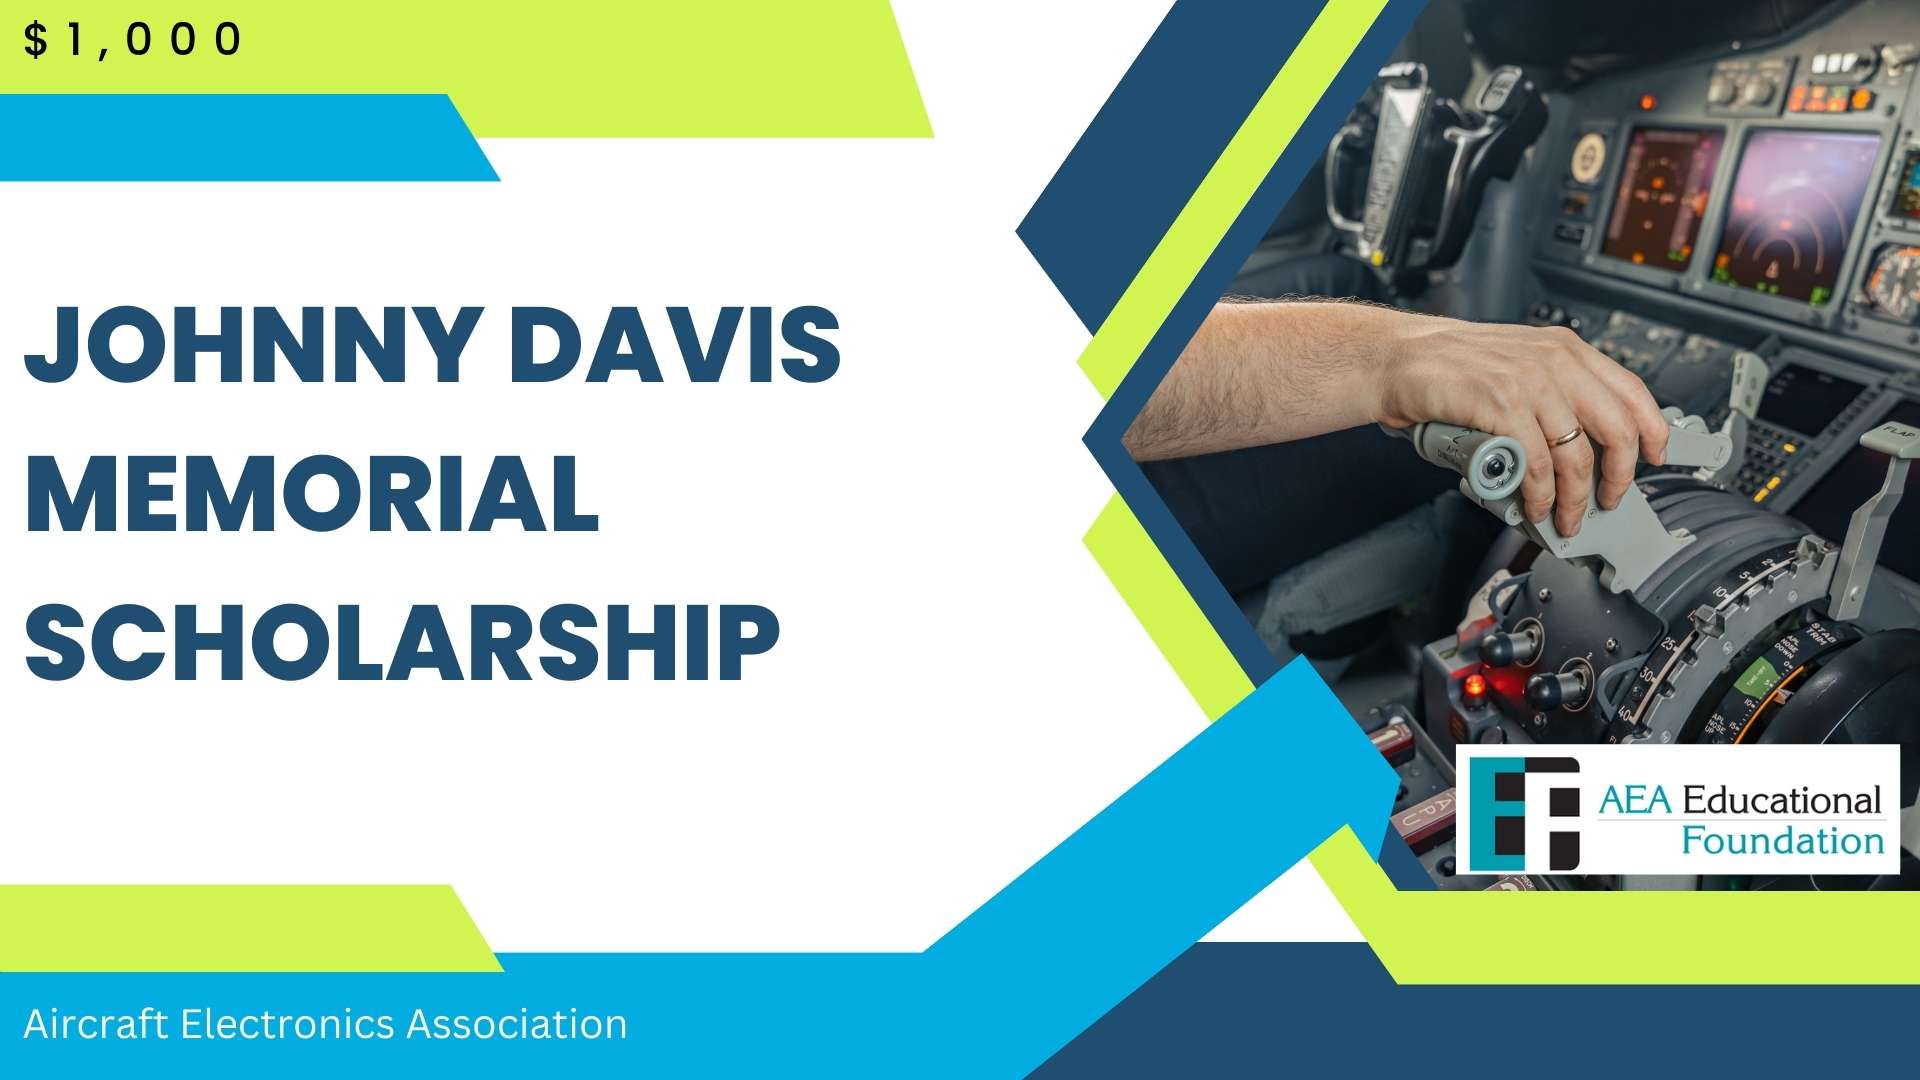 Johnny Davis Memorial Scholarship